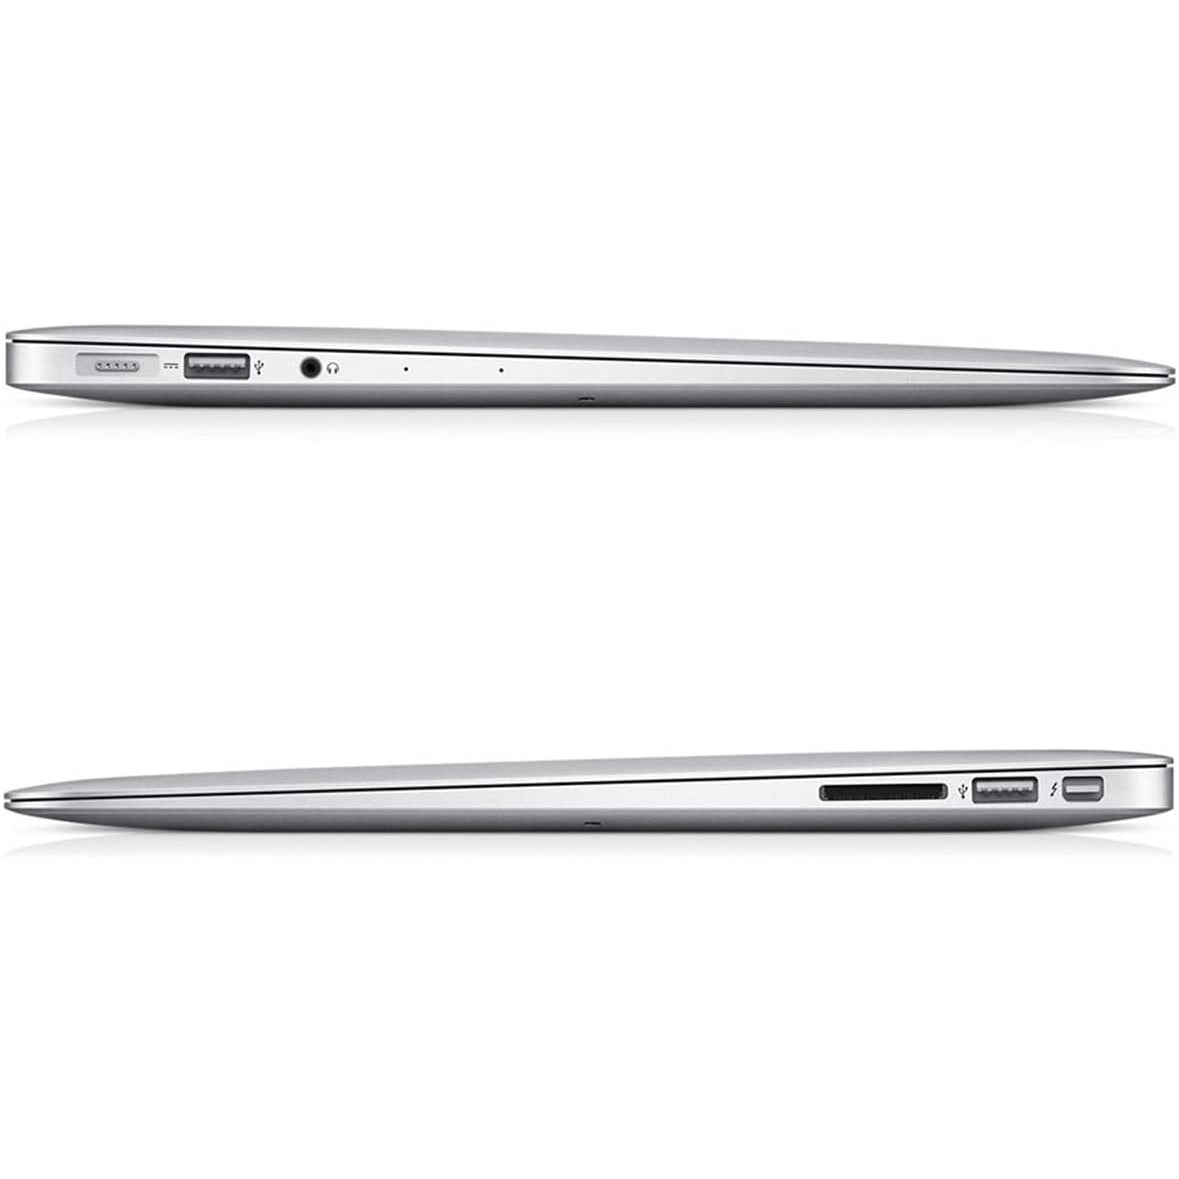 Apple MacBook Air 13.3'' MMGG2LLA (2015) Laptop, Intel Core i5, 8GB RAM, 256GB SSD, Silver - Refurbished Good